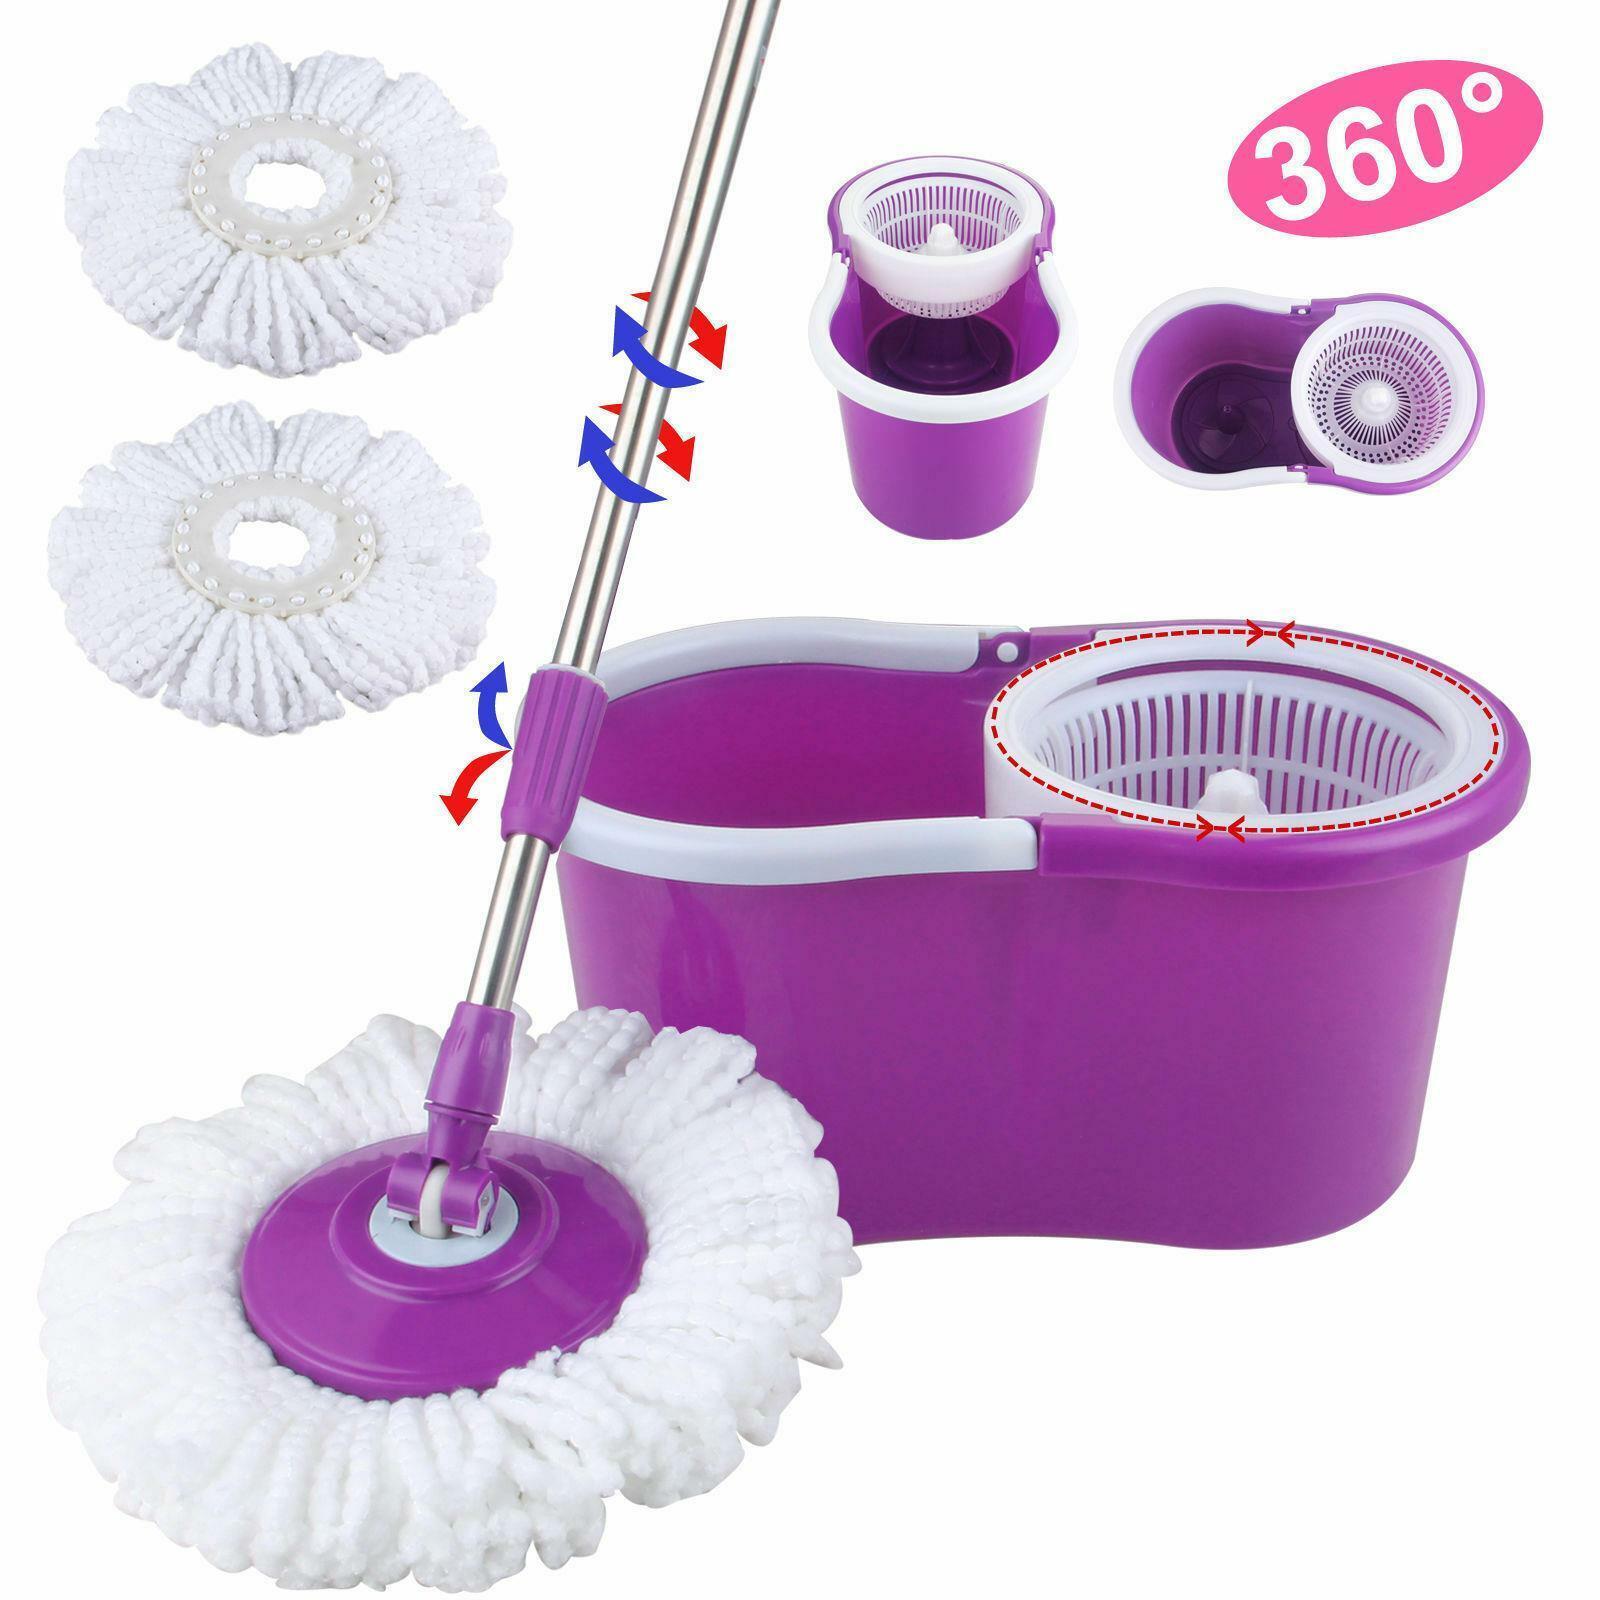 Microfiber Spinning Magic Floor Mop With Bucket 2 Head 360 Rotating Purple - $51.99